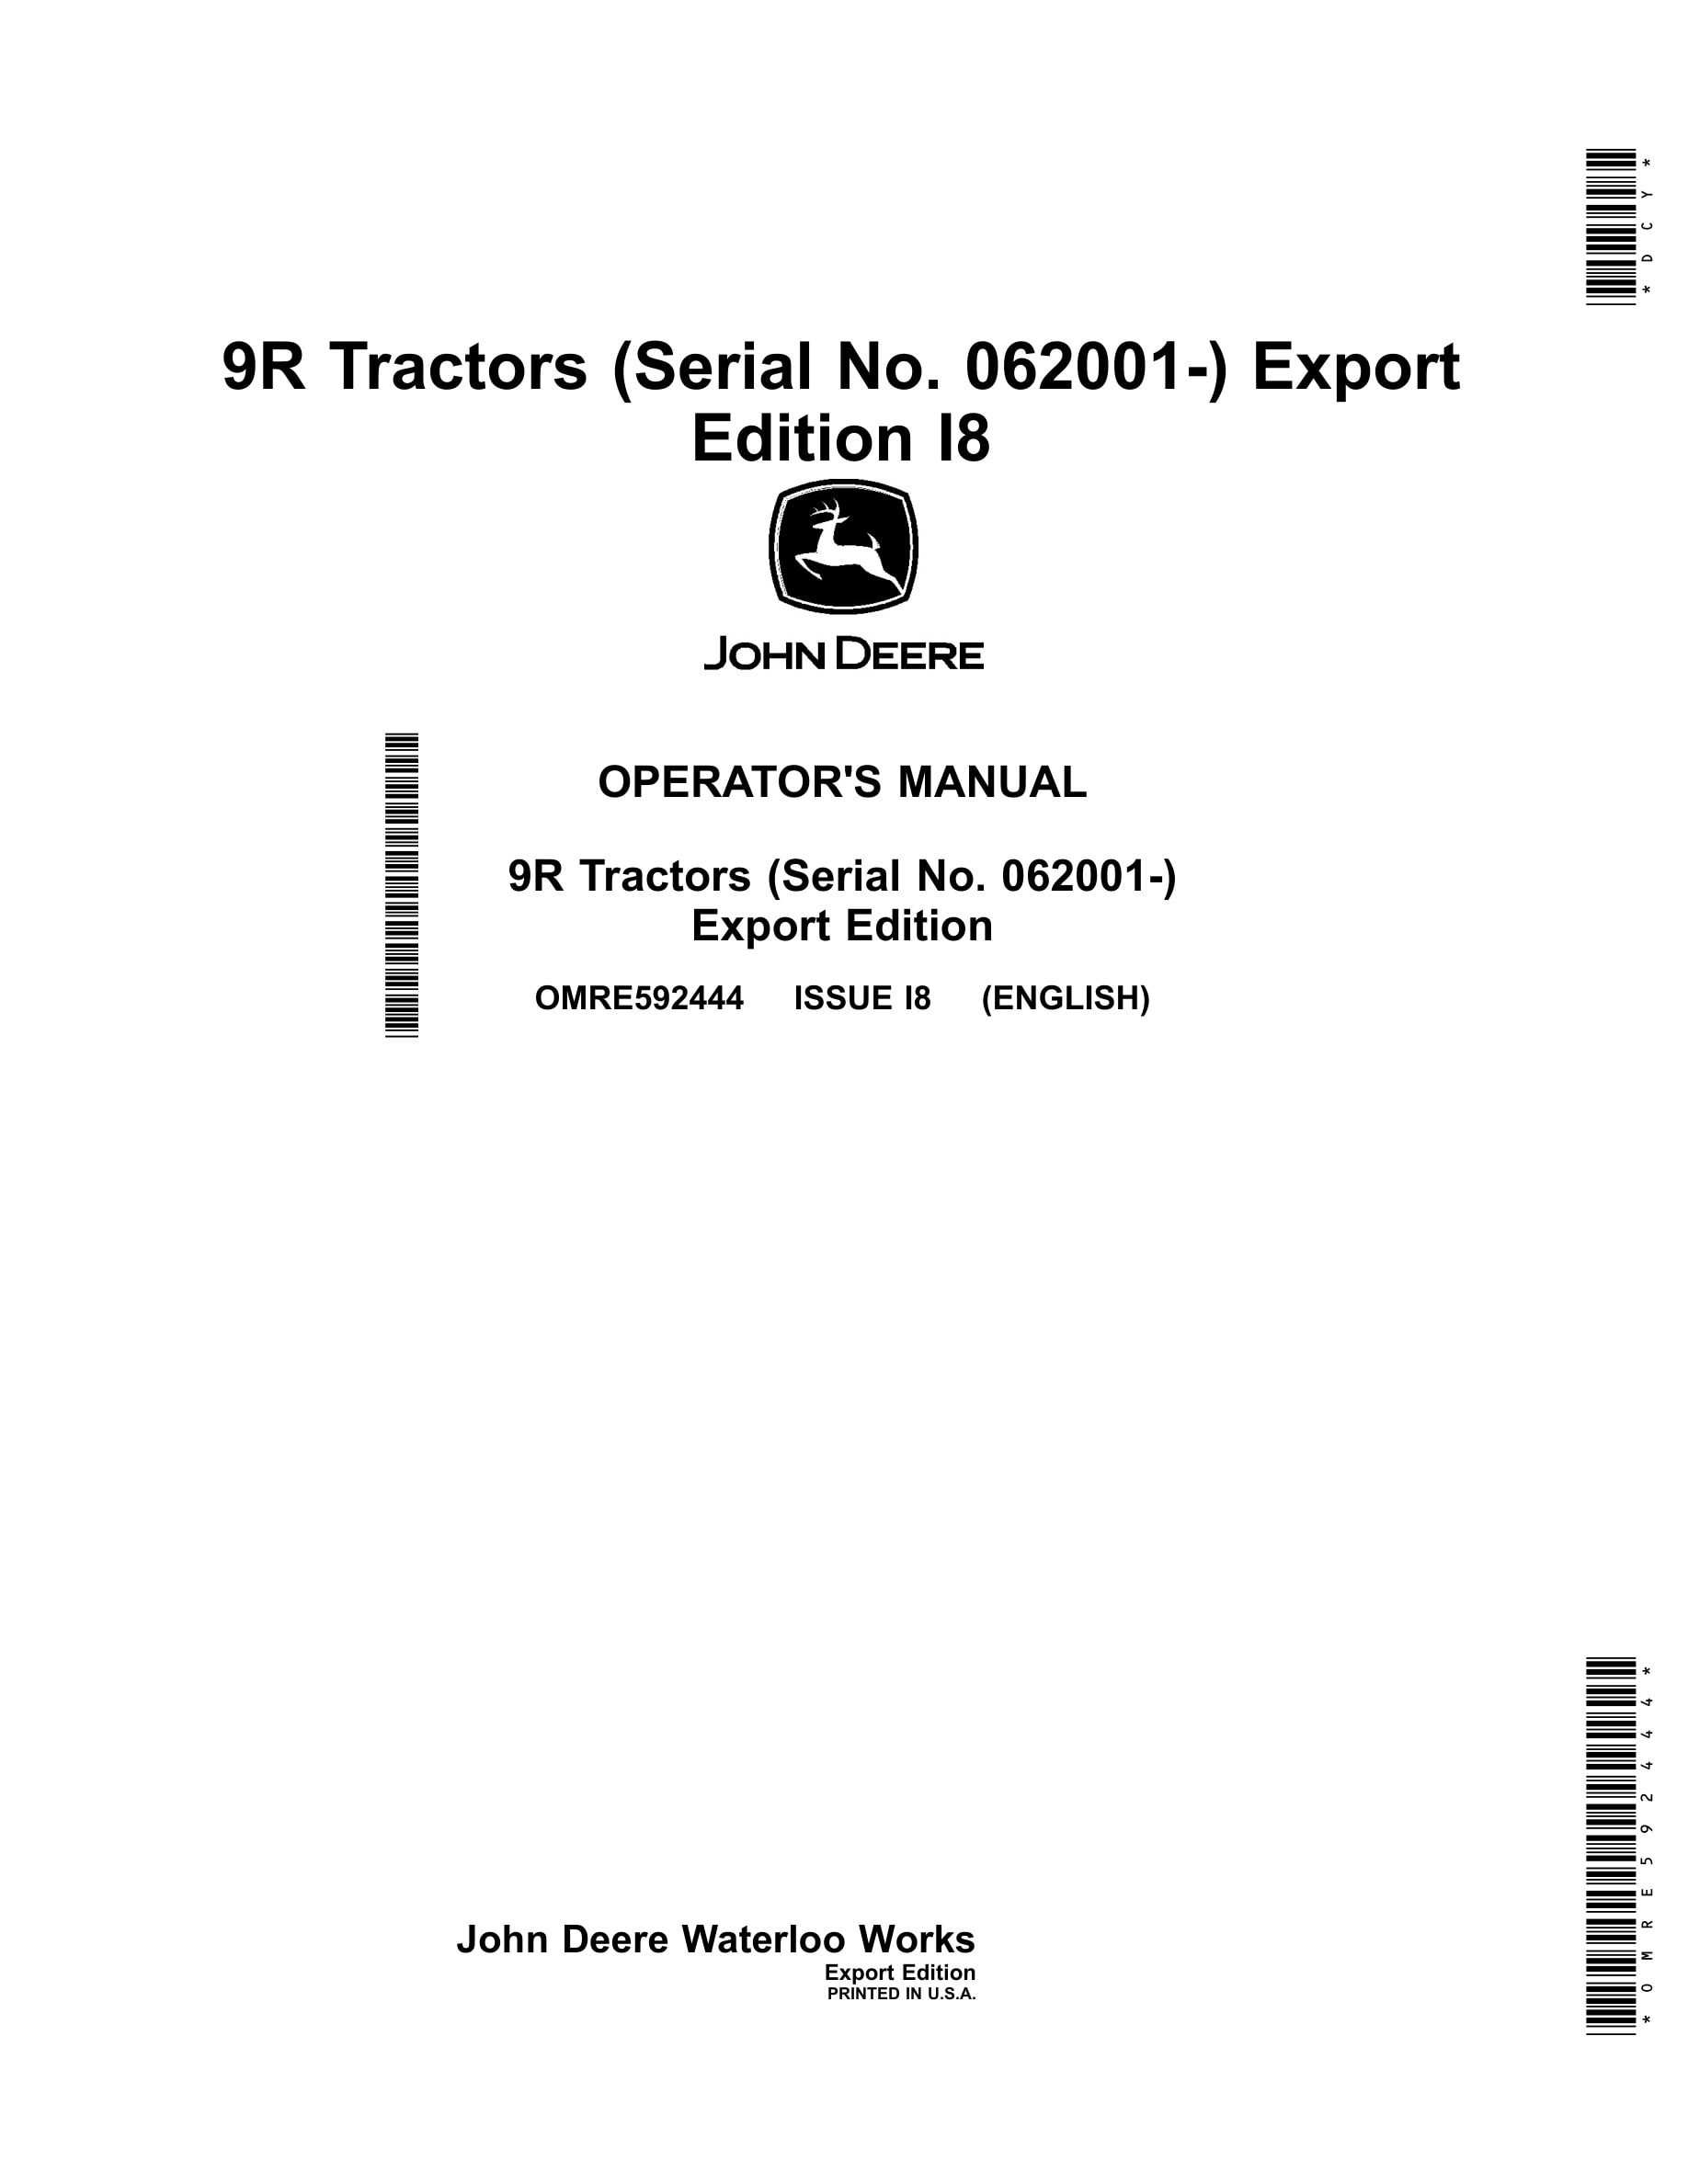 John Deere 9r Tractors Operator Manuals OMRE592444-1